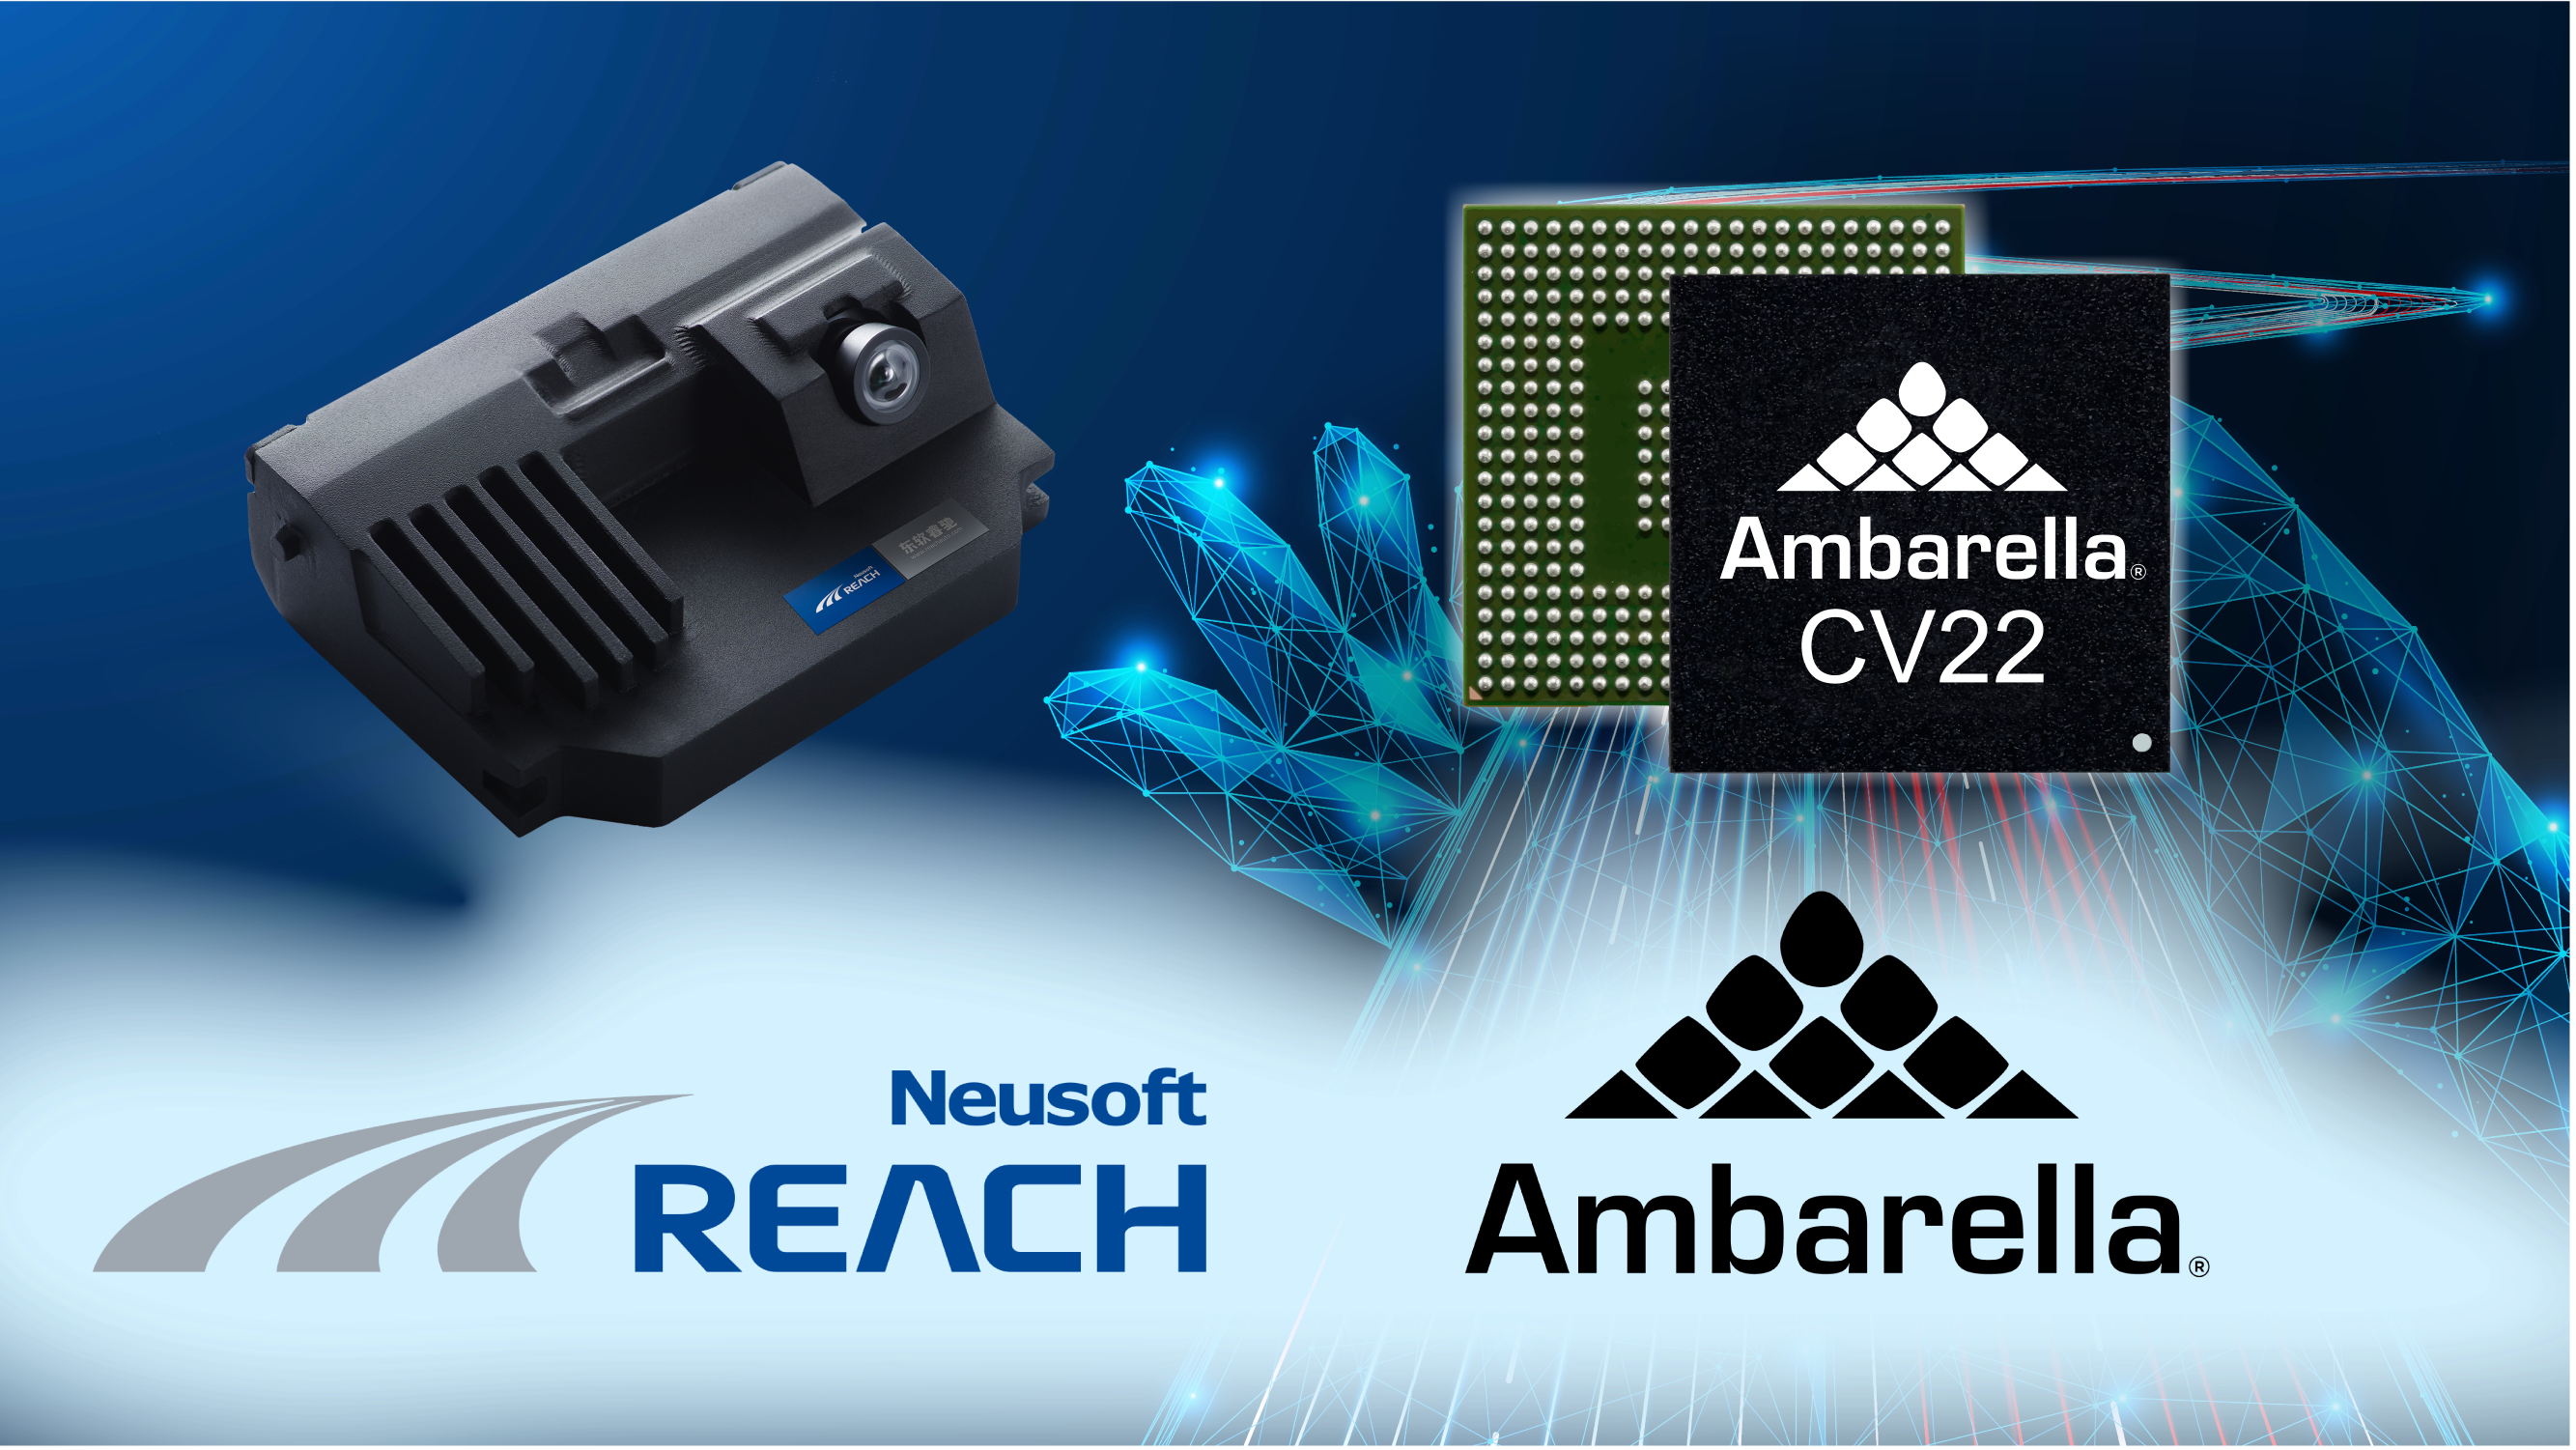 Ambarella and Neusoft Reach front ADAS smart camera in mass production